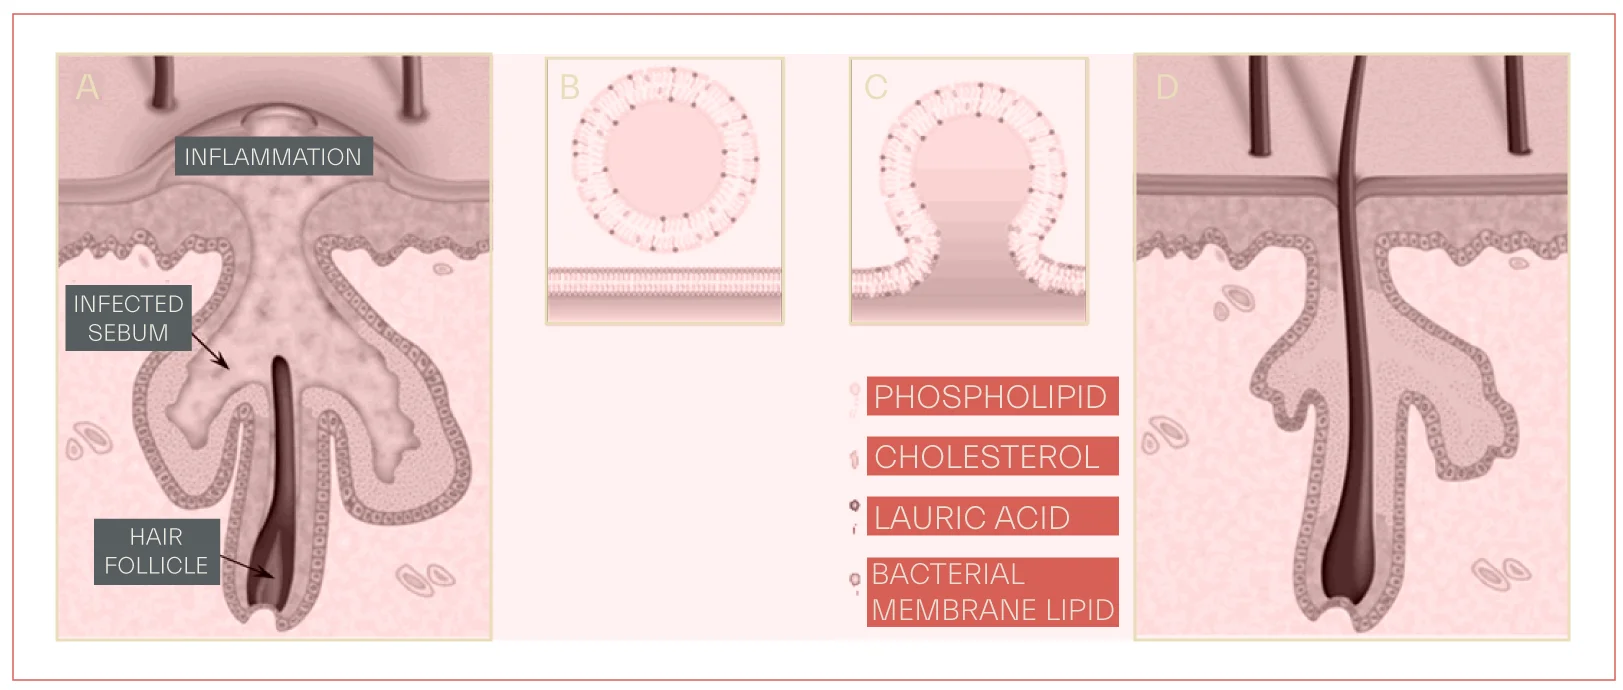 Sebaceous fatty acids in treatment of acne